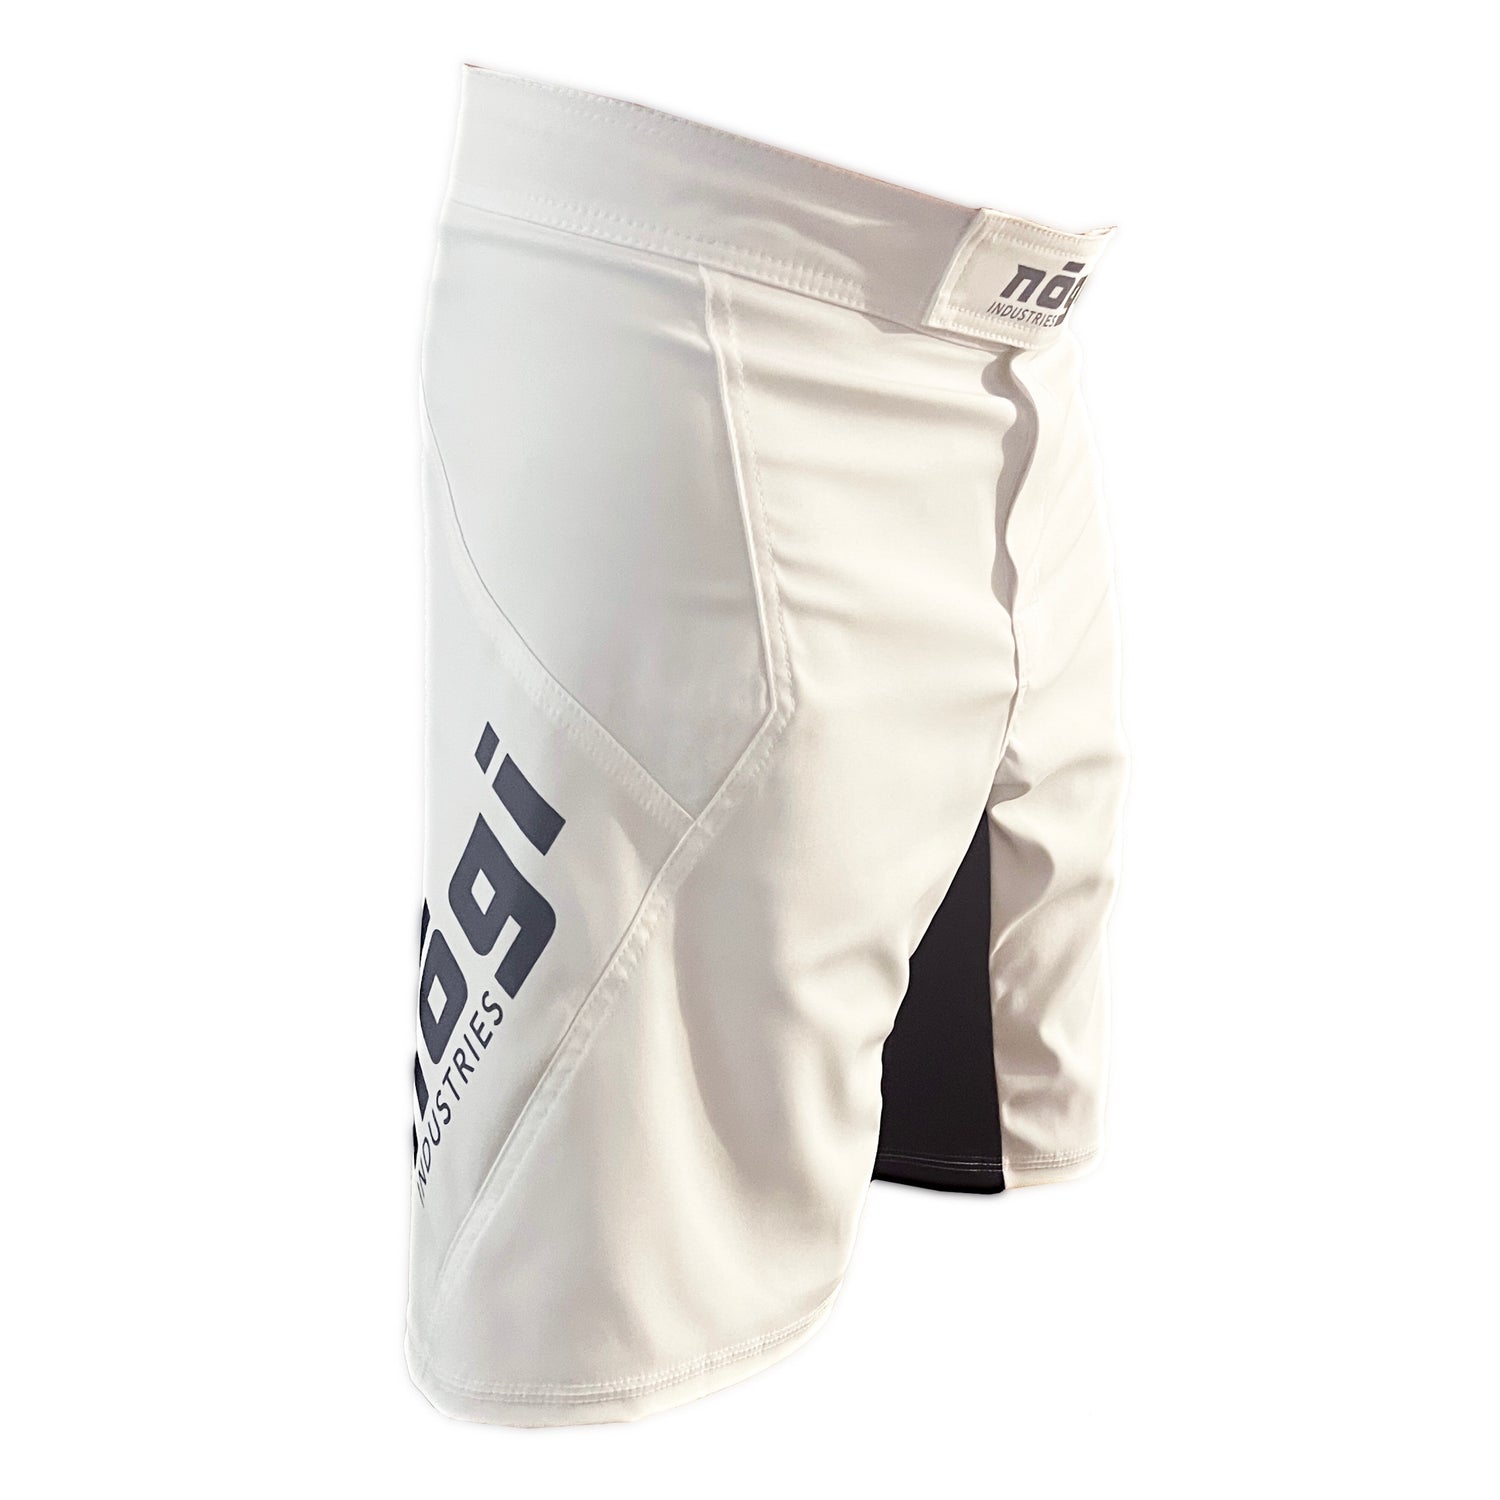 Phantom 4.0 Fight Shorts - Arctic White & Gray - MADE IN USA